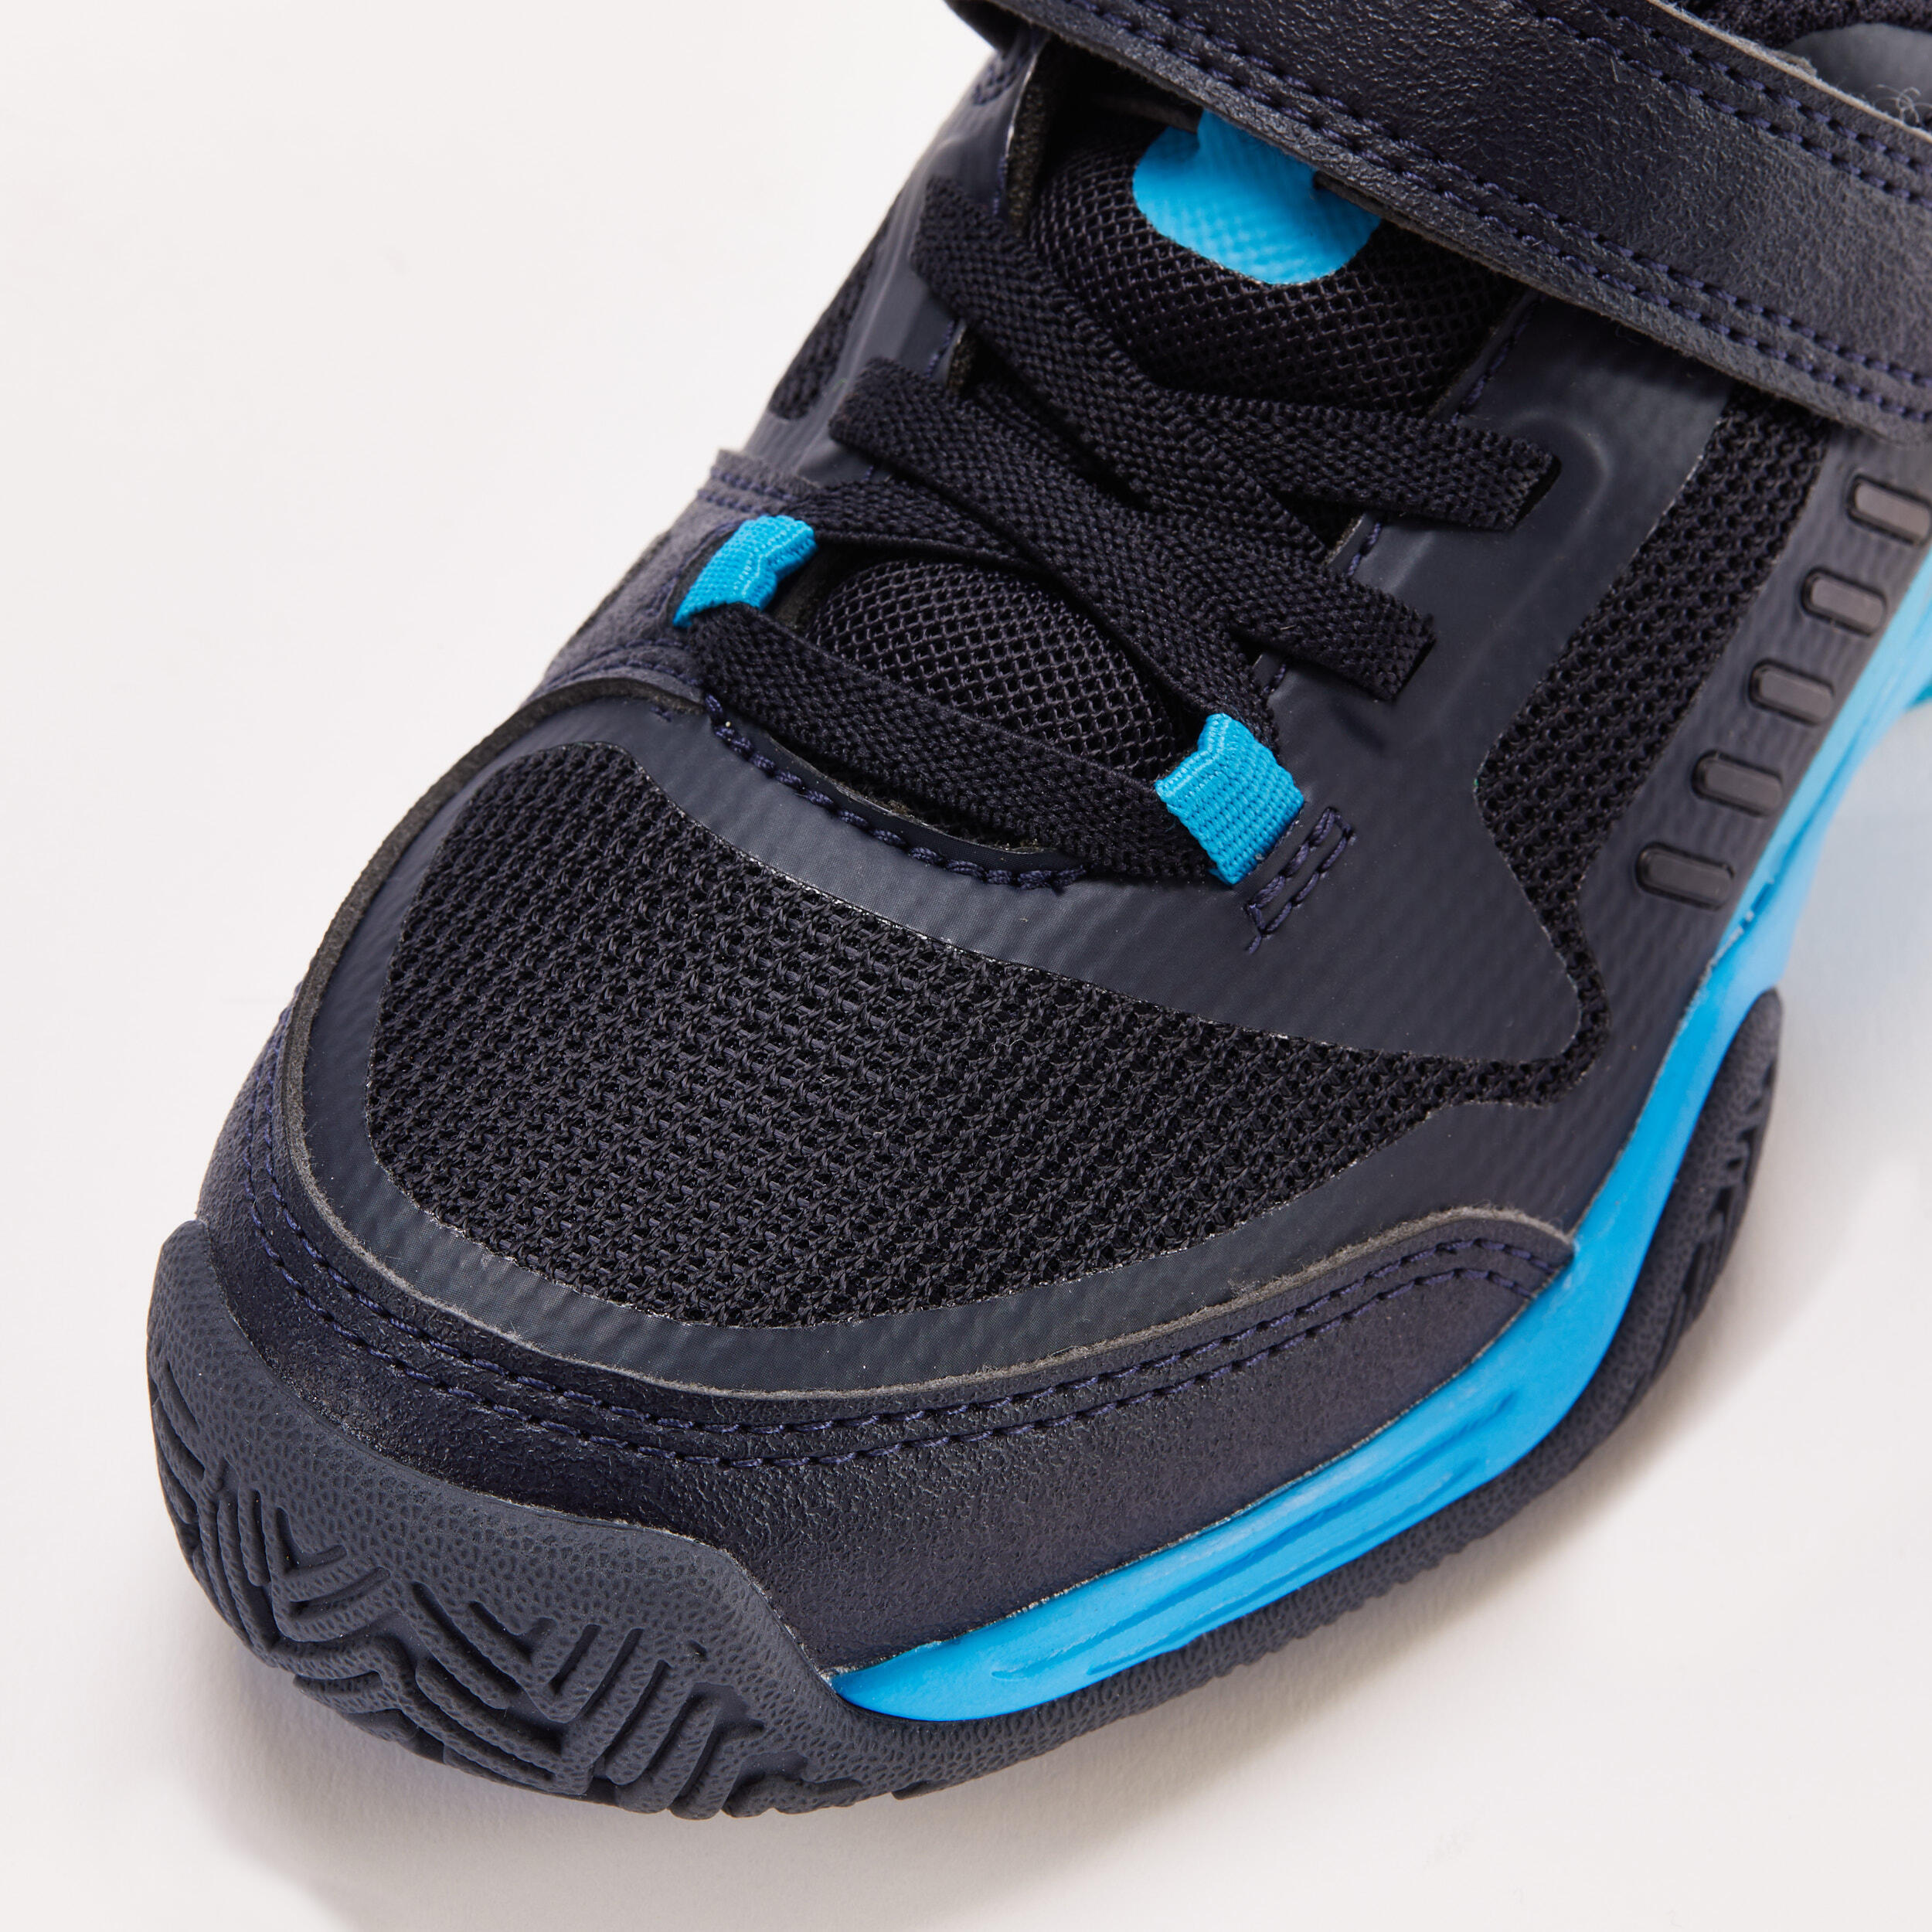 Kids' Tennis Shoes with Rip-Tab TS500 Fast - Nightsky 8/9